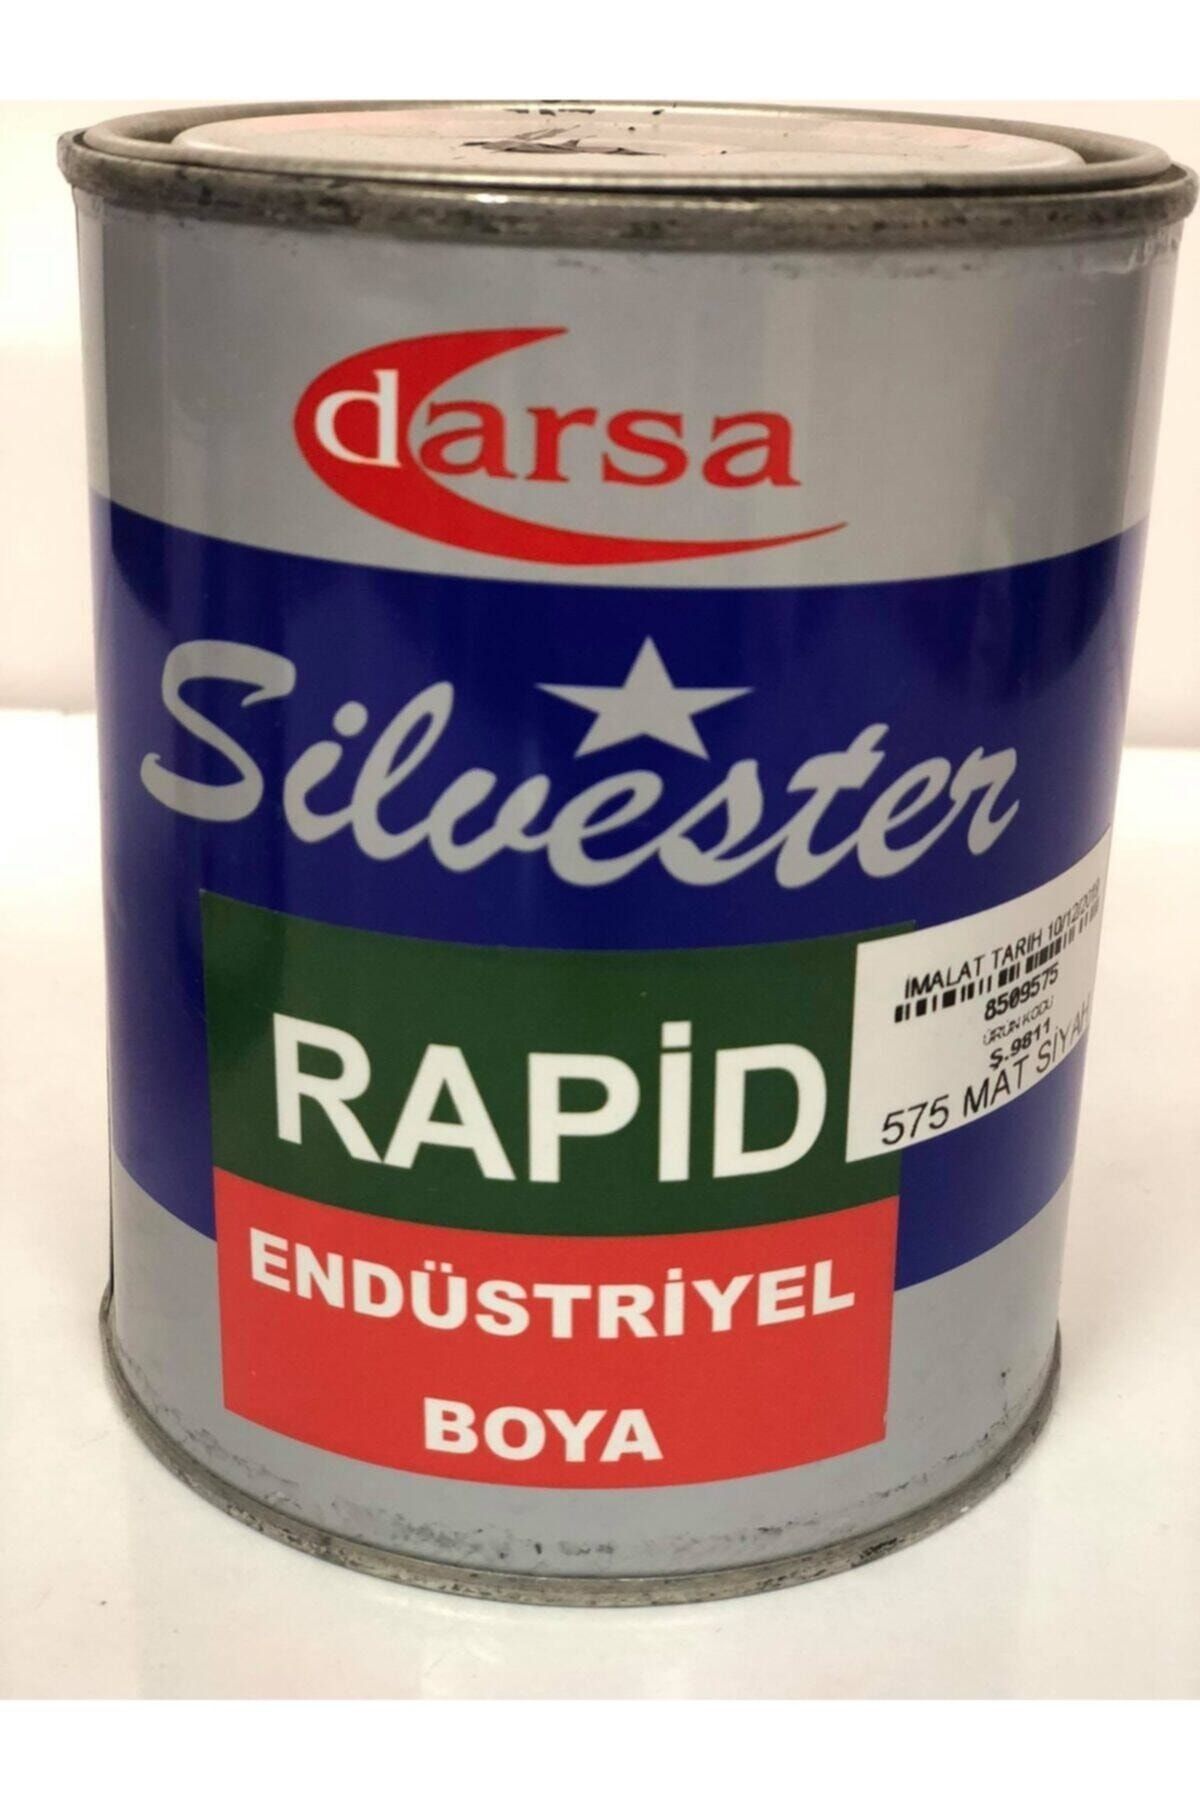 DARSA Silvester Rapid Endüstriyel Boya 0.850 Gr